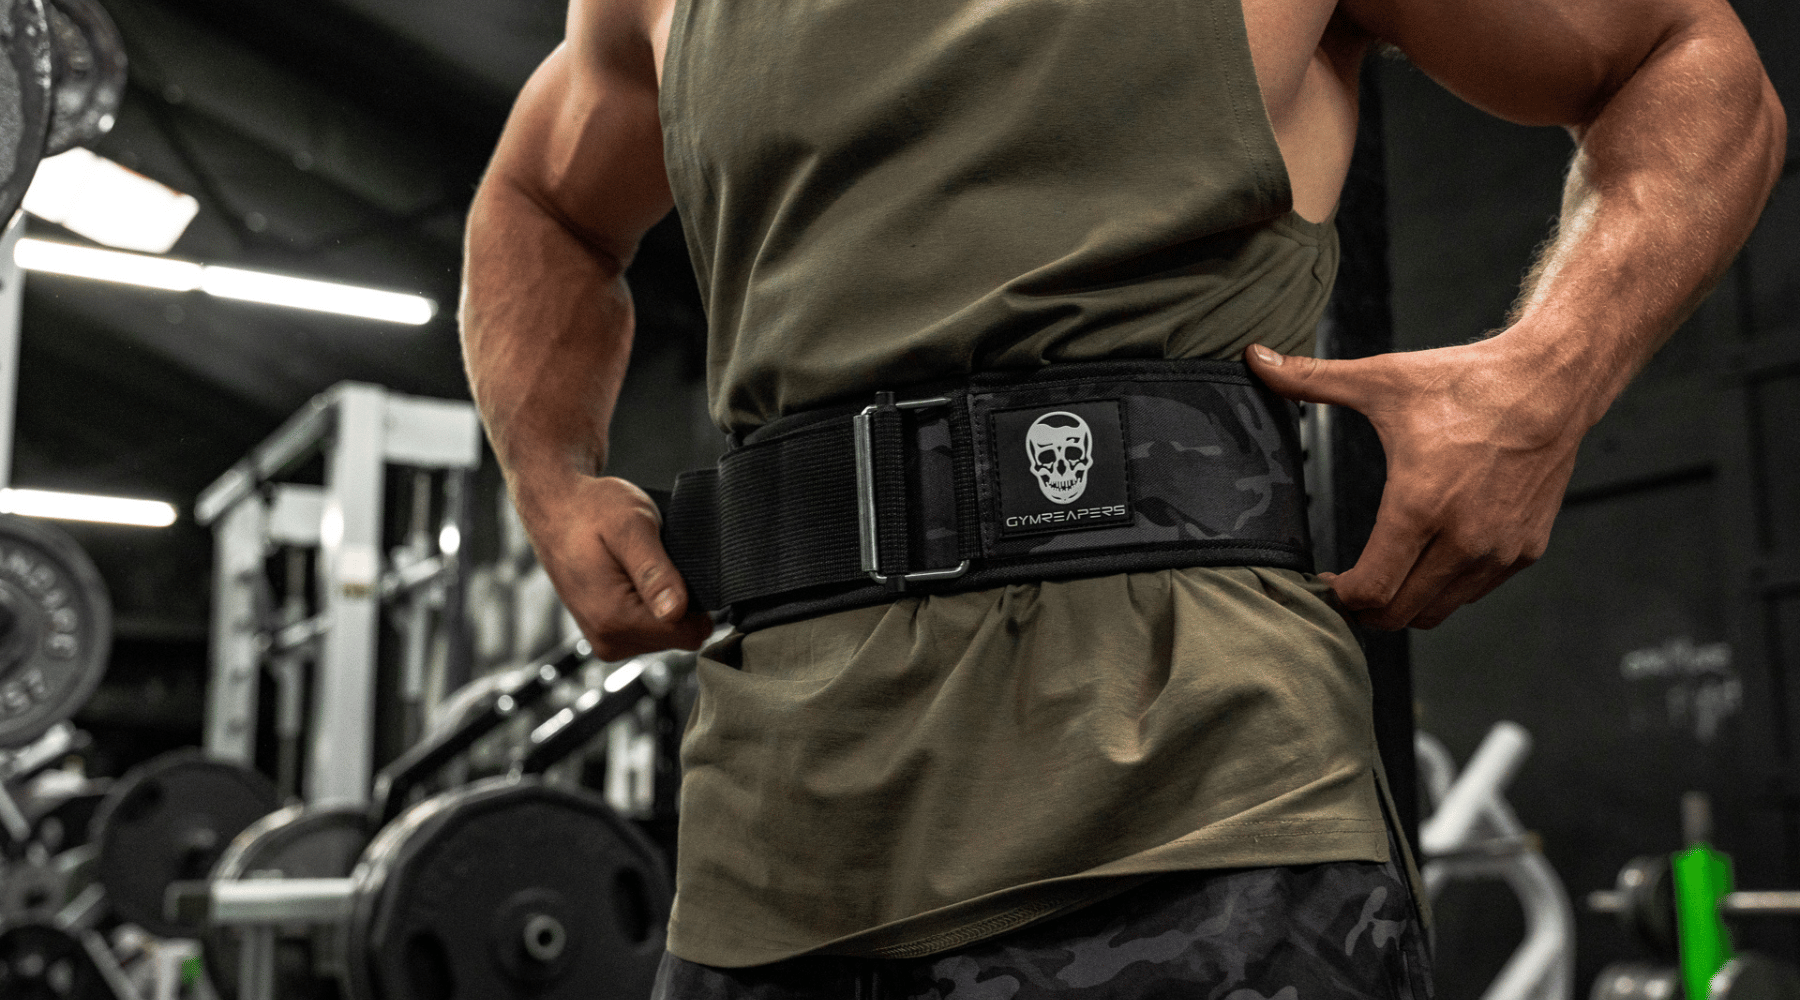 Gym Belt for back support for Professional Bodybuilders